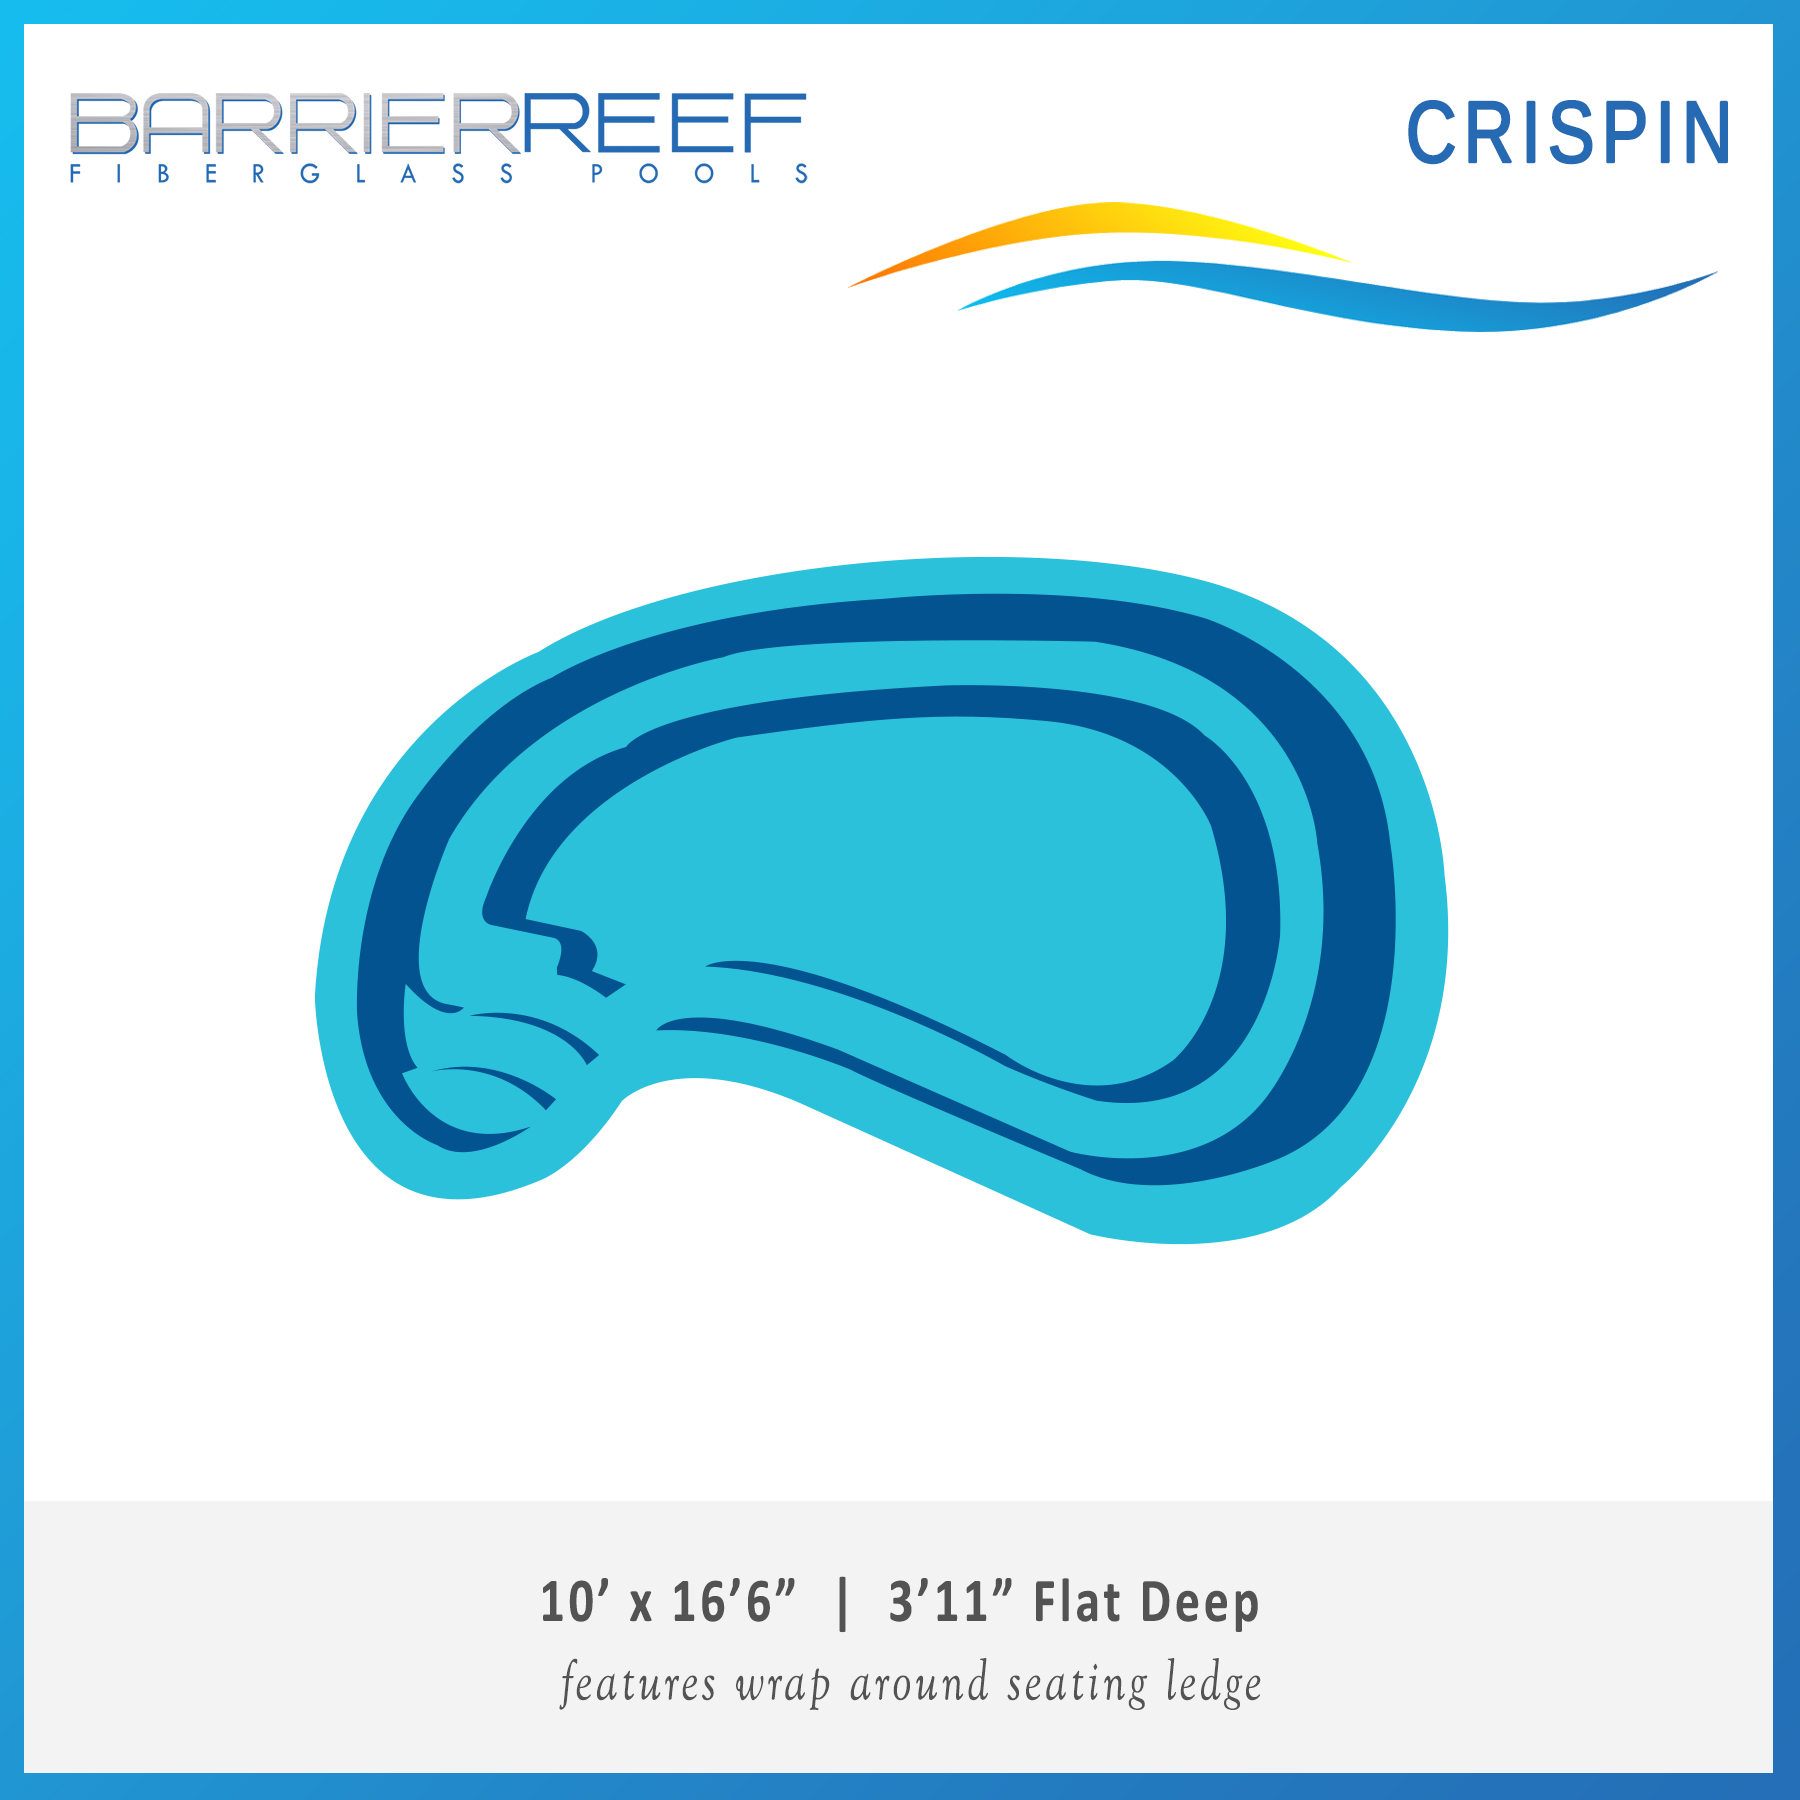 Crispin Barrier Reef Fiberglass Pool